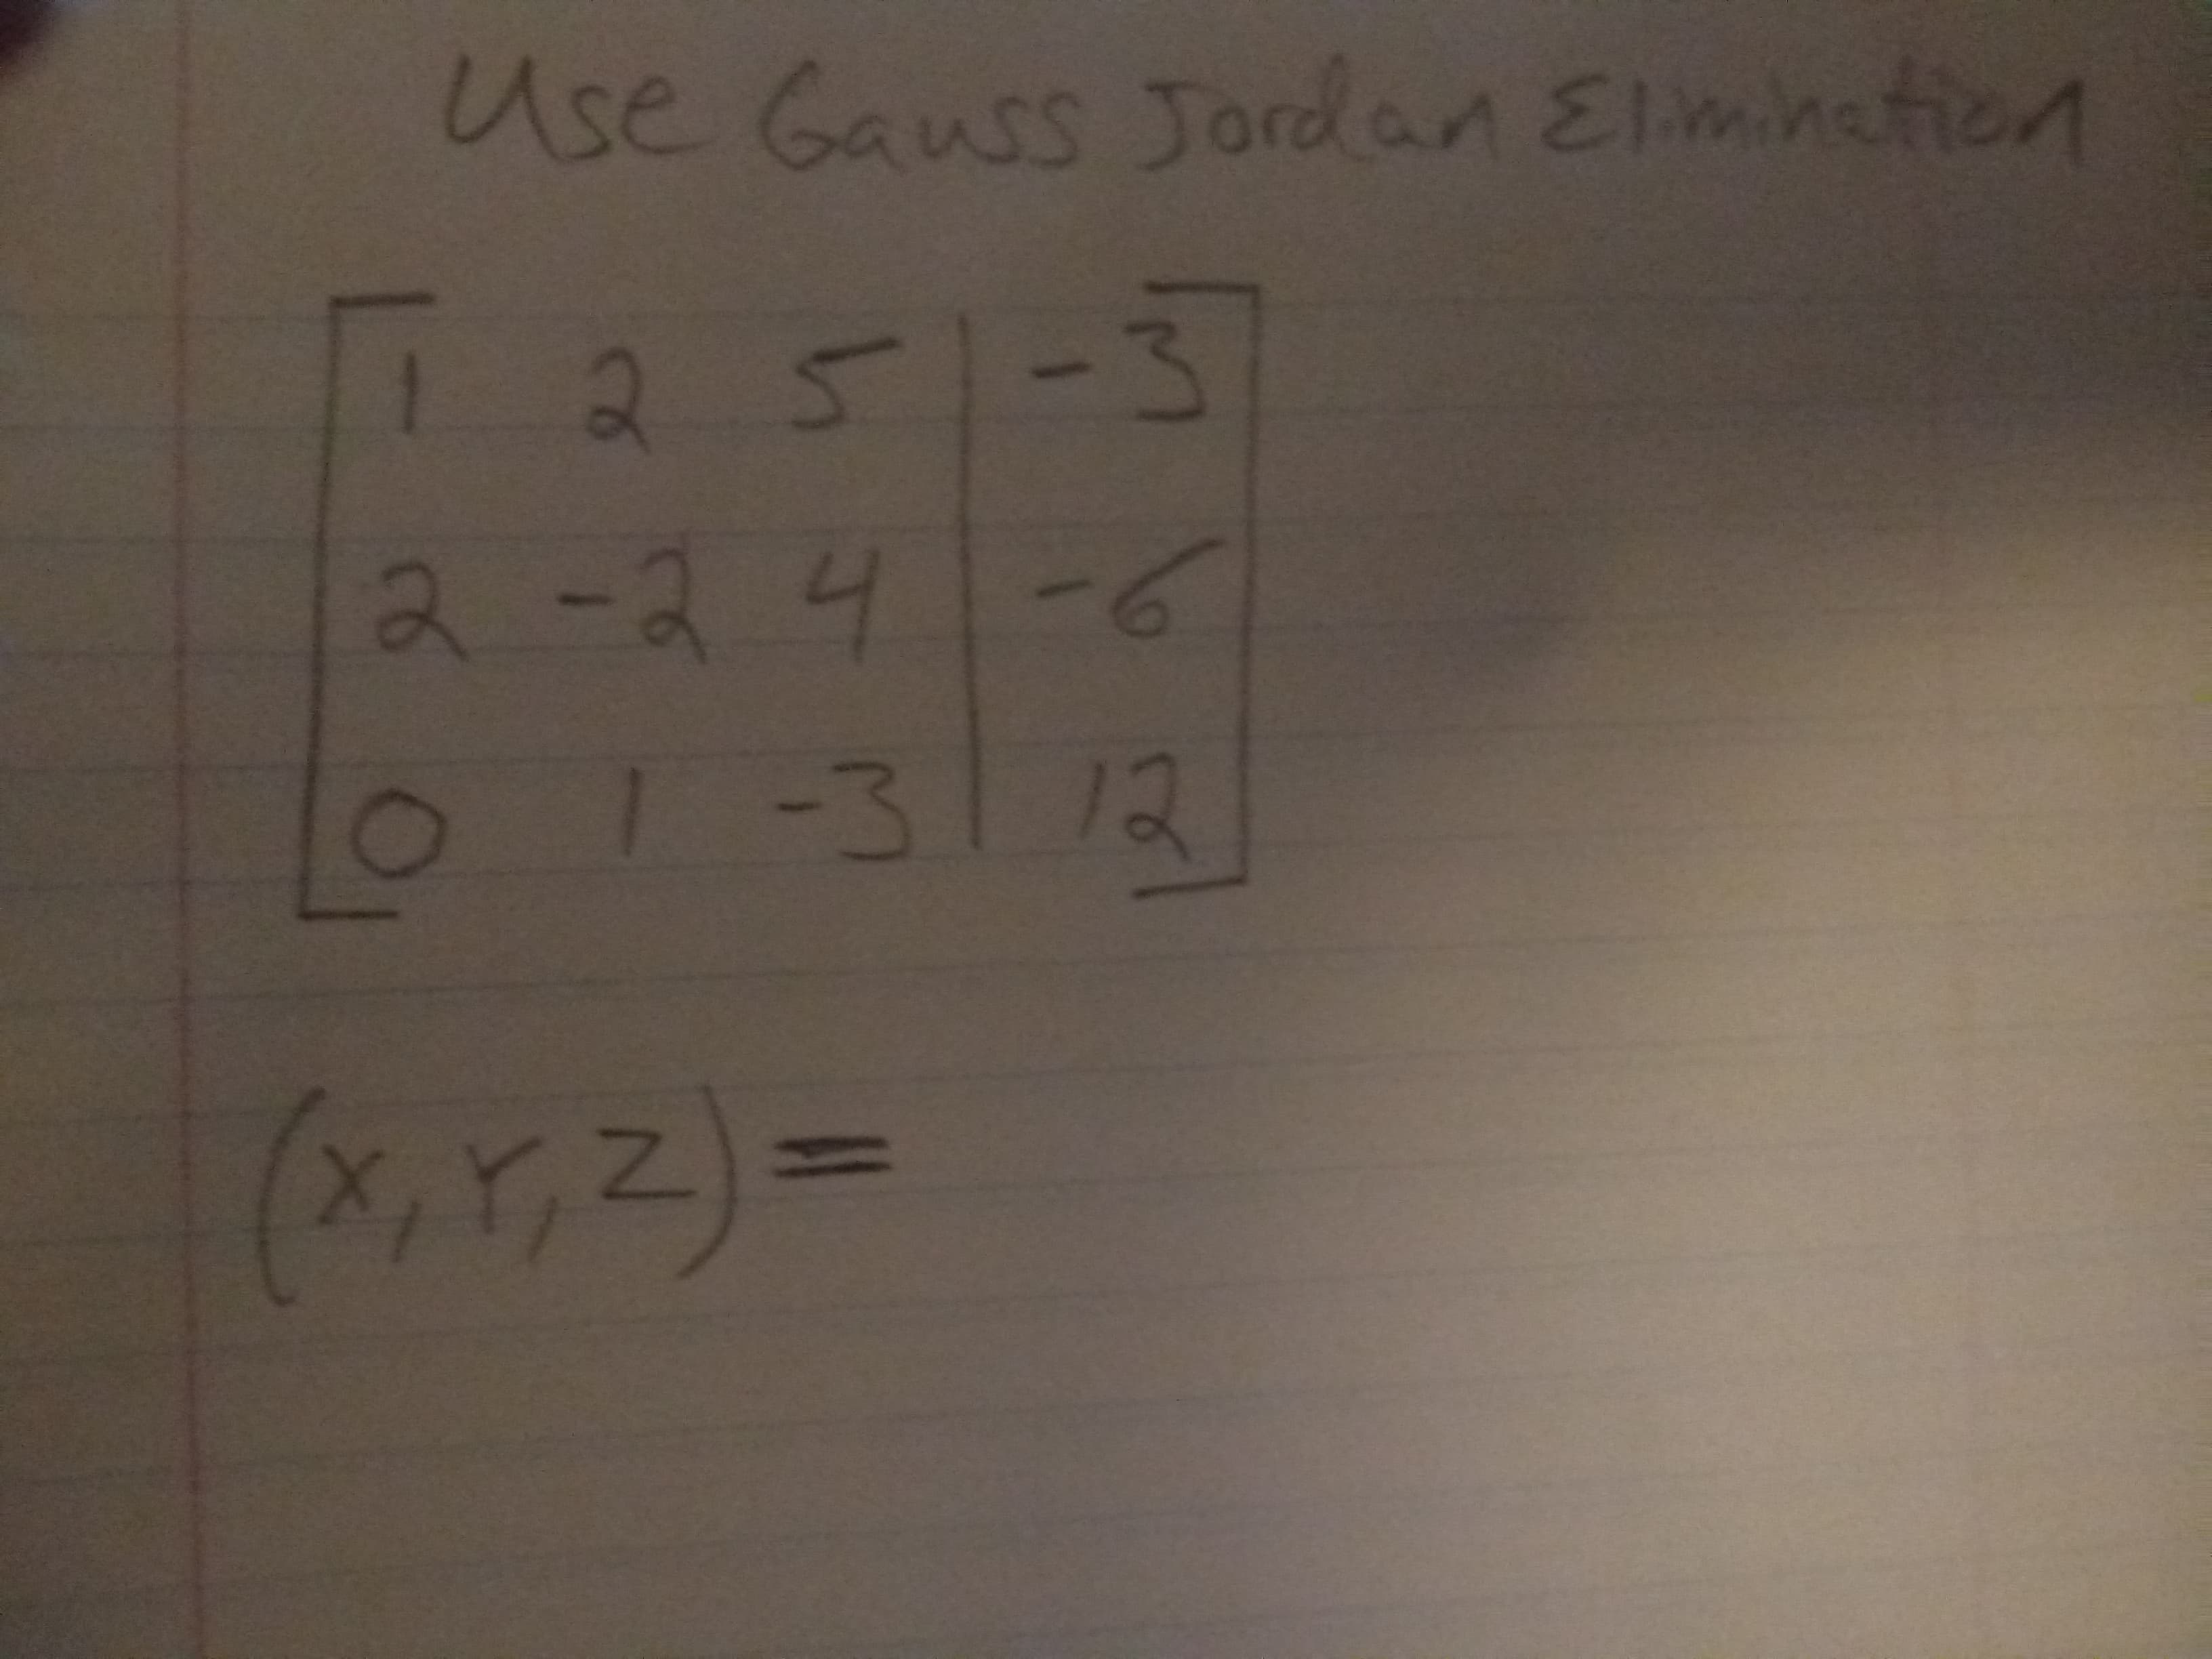 Use Gauss Jordan Elimnafion
1251-3
2-24-6
-3
12
